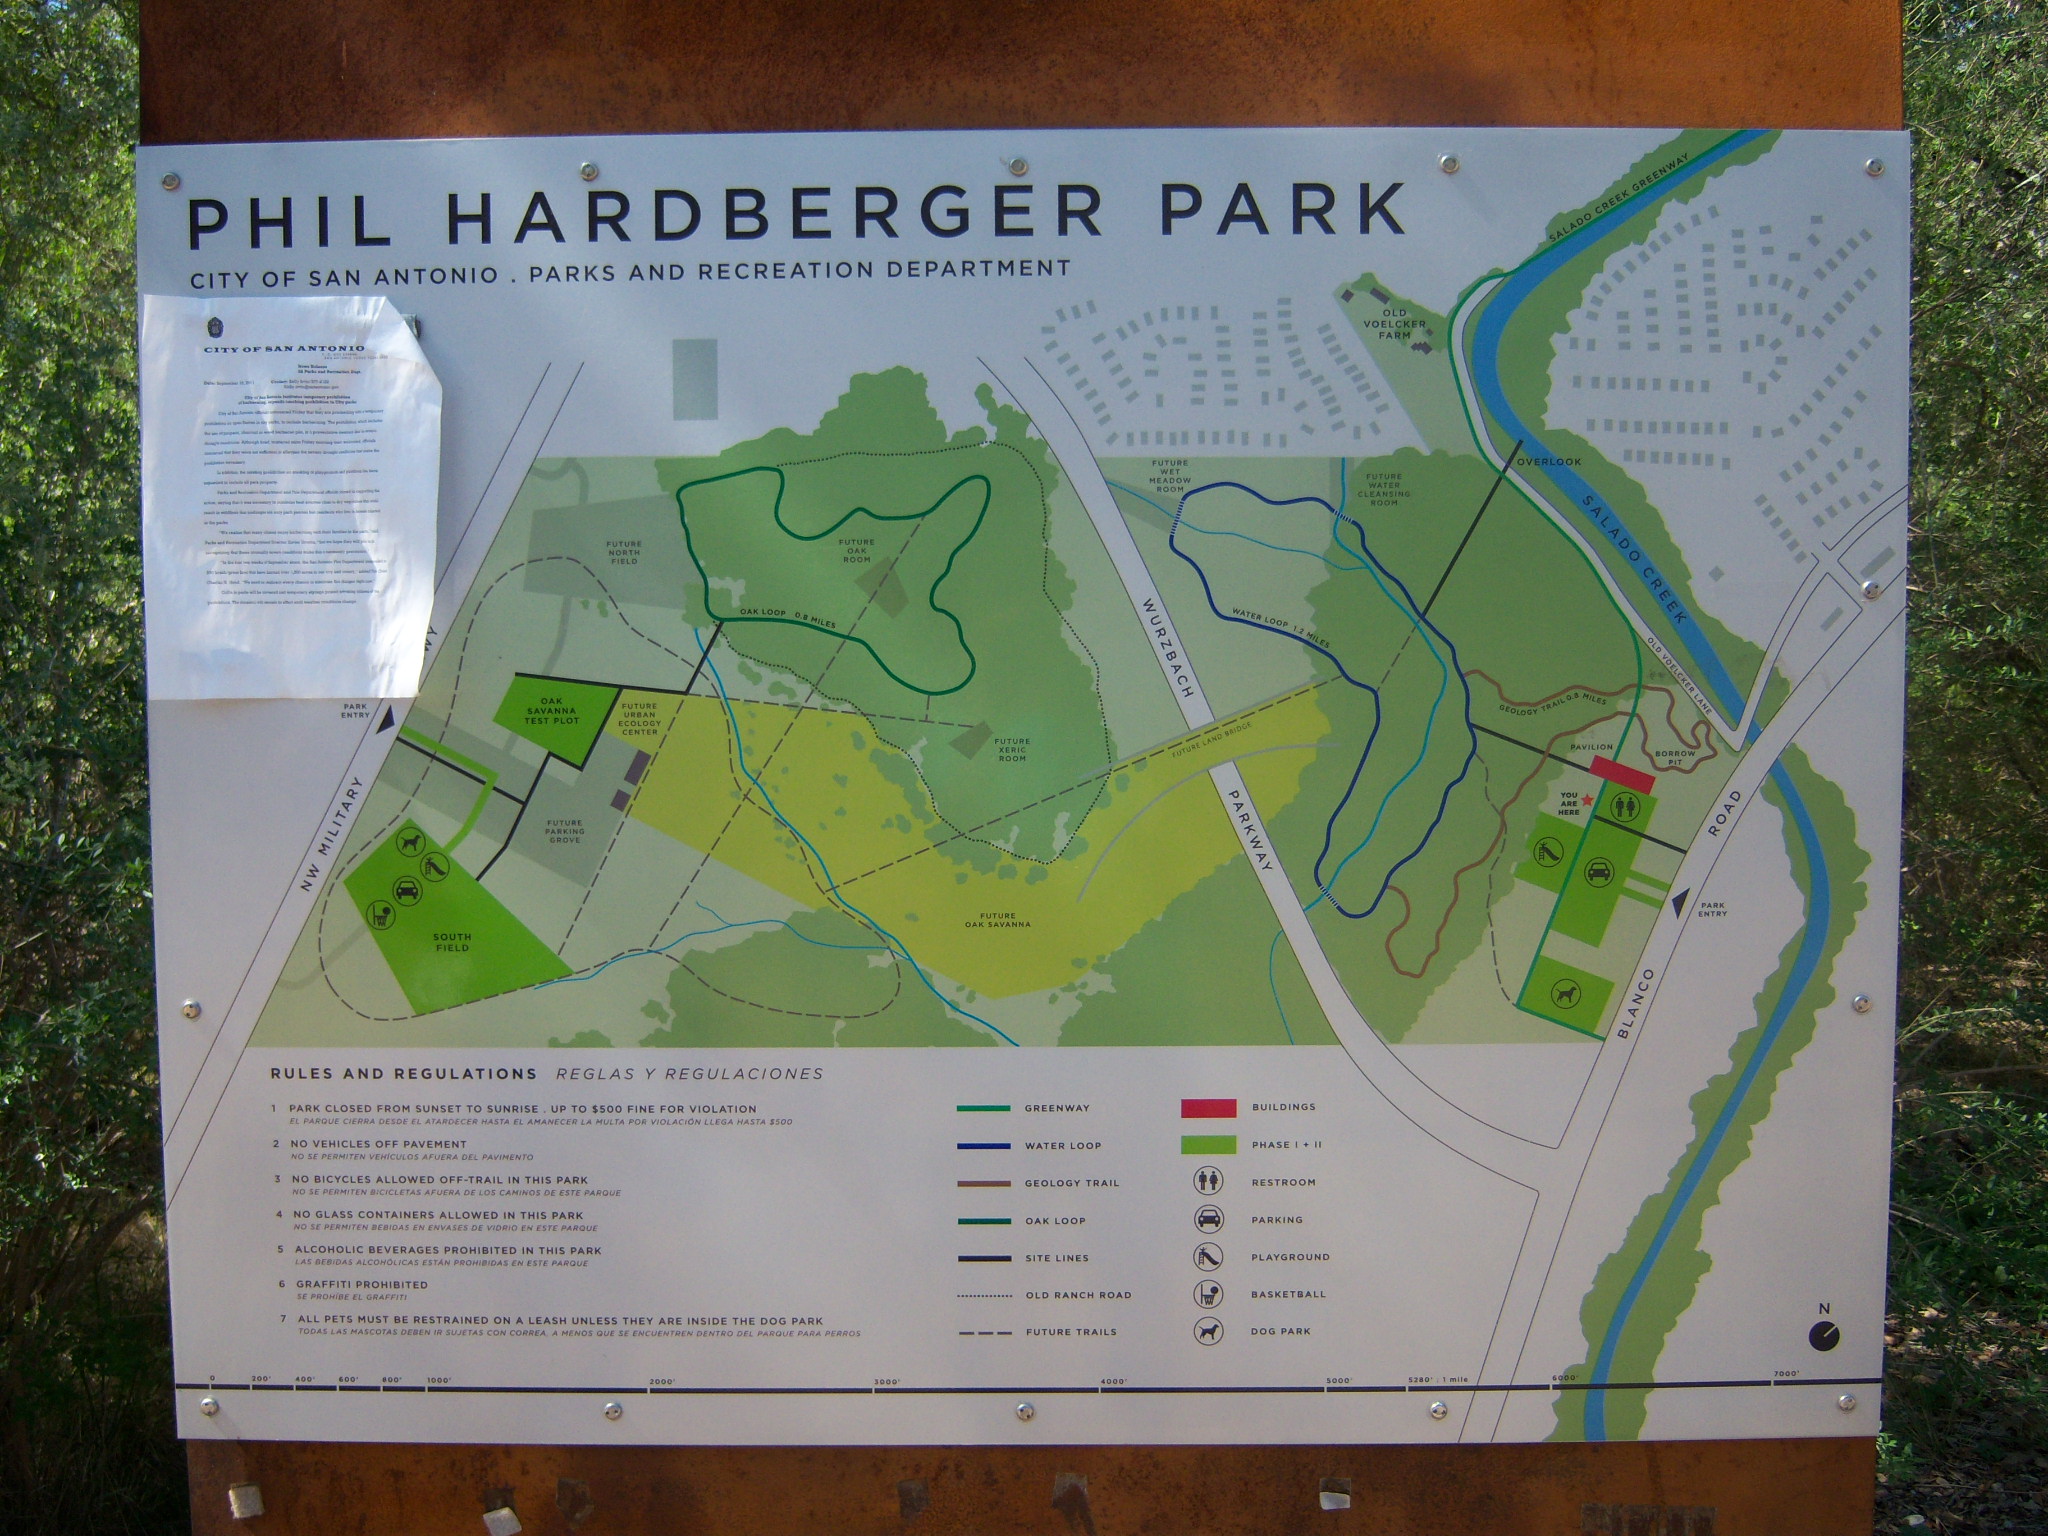 Phil Hardberger Park (East)